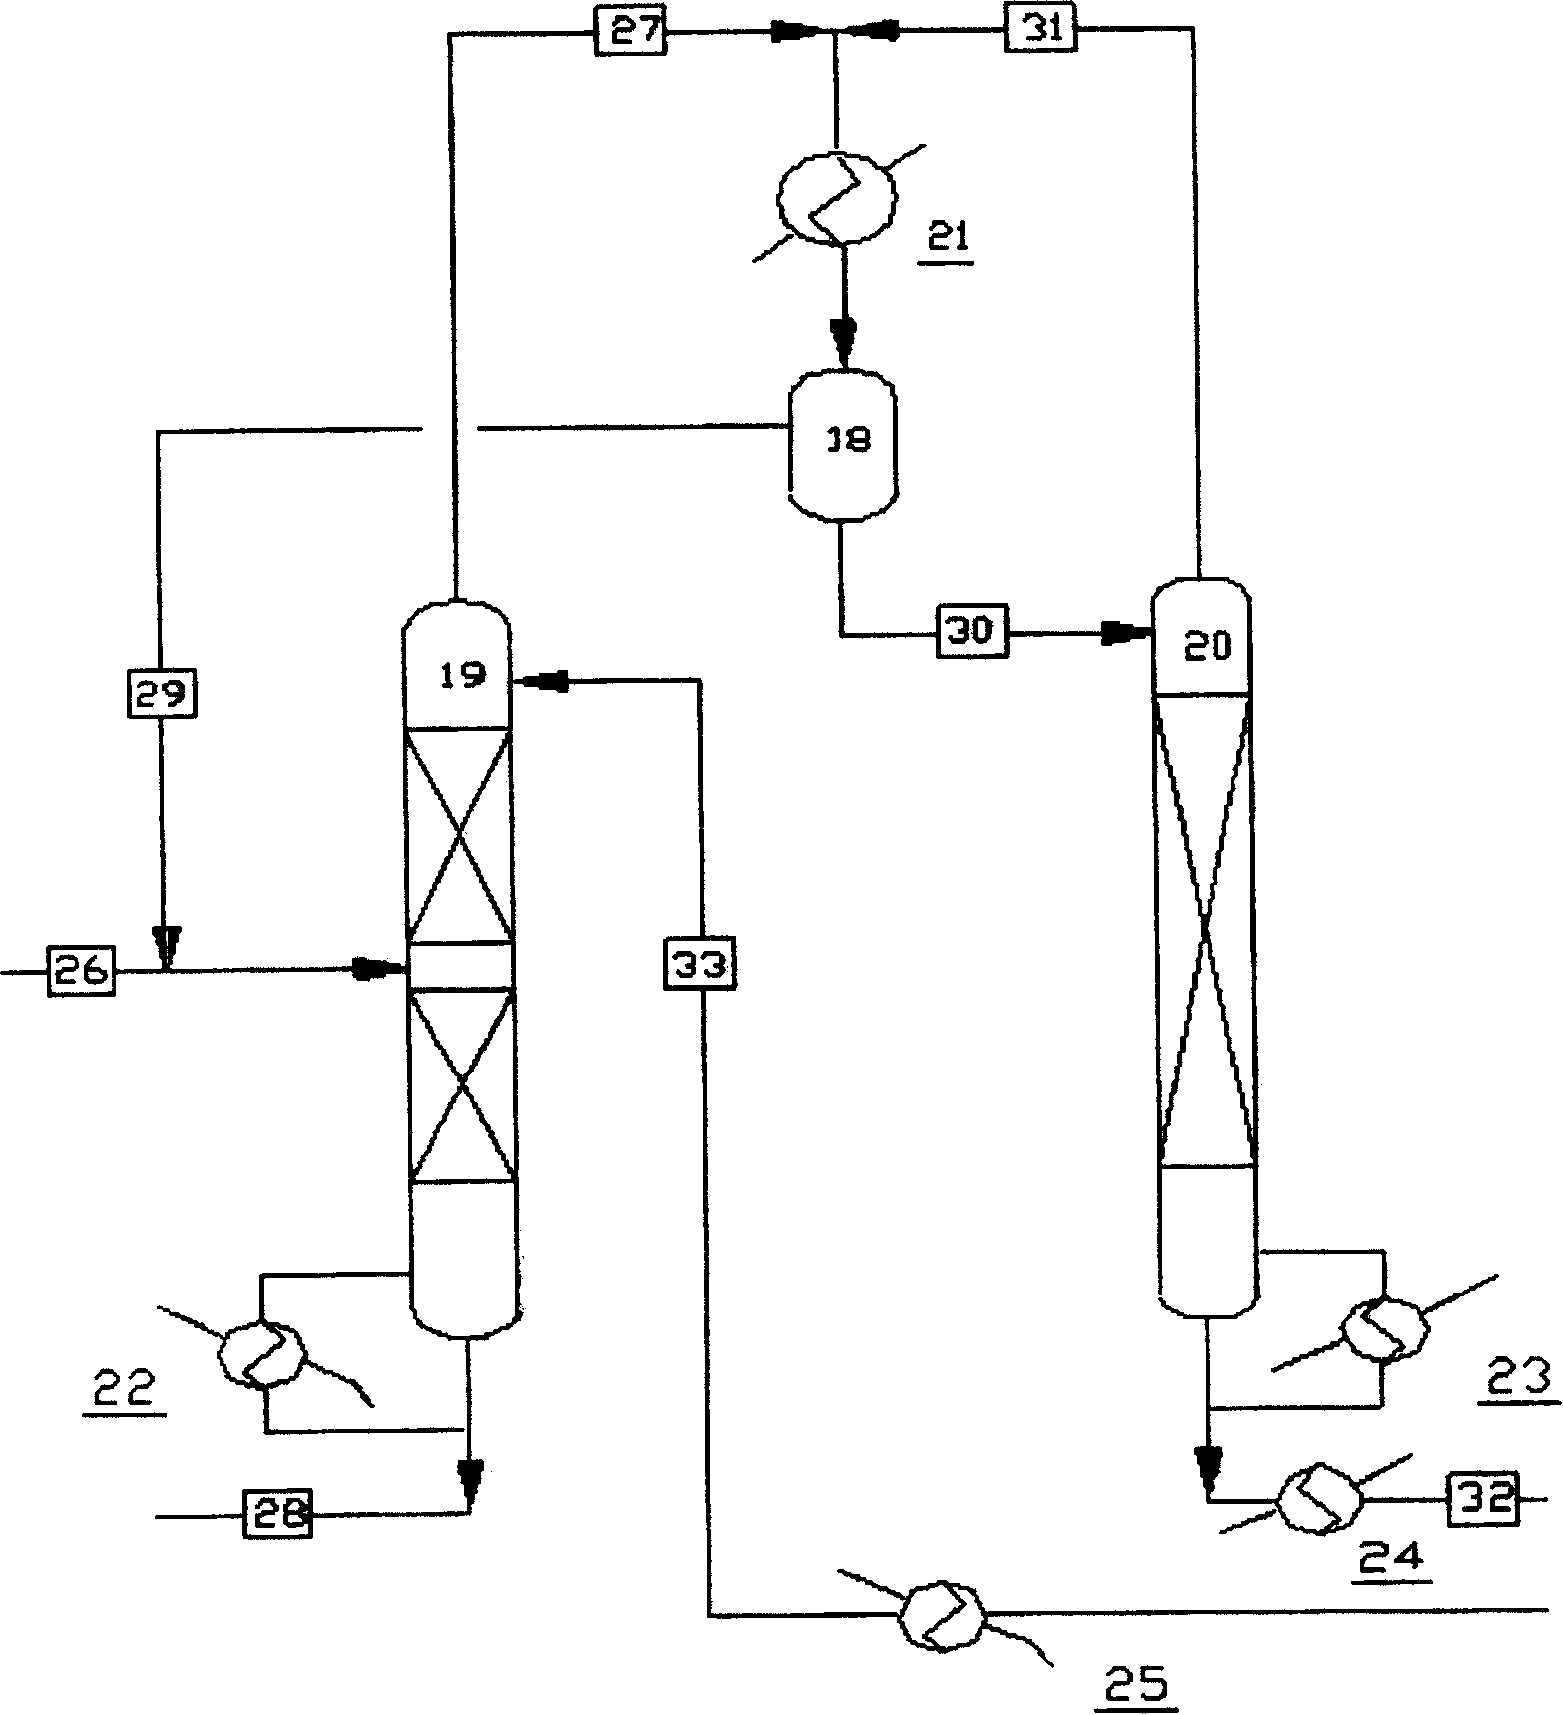 Technology of separating dimethyl carbonate from dimethyl carbonate and methanol and water